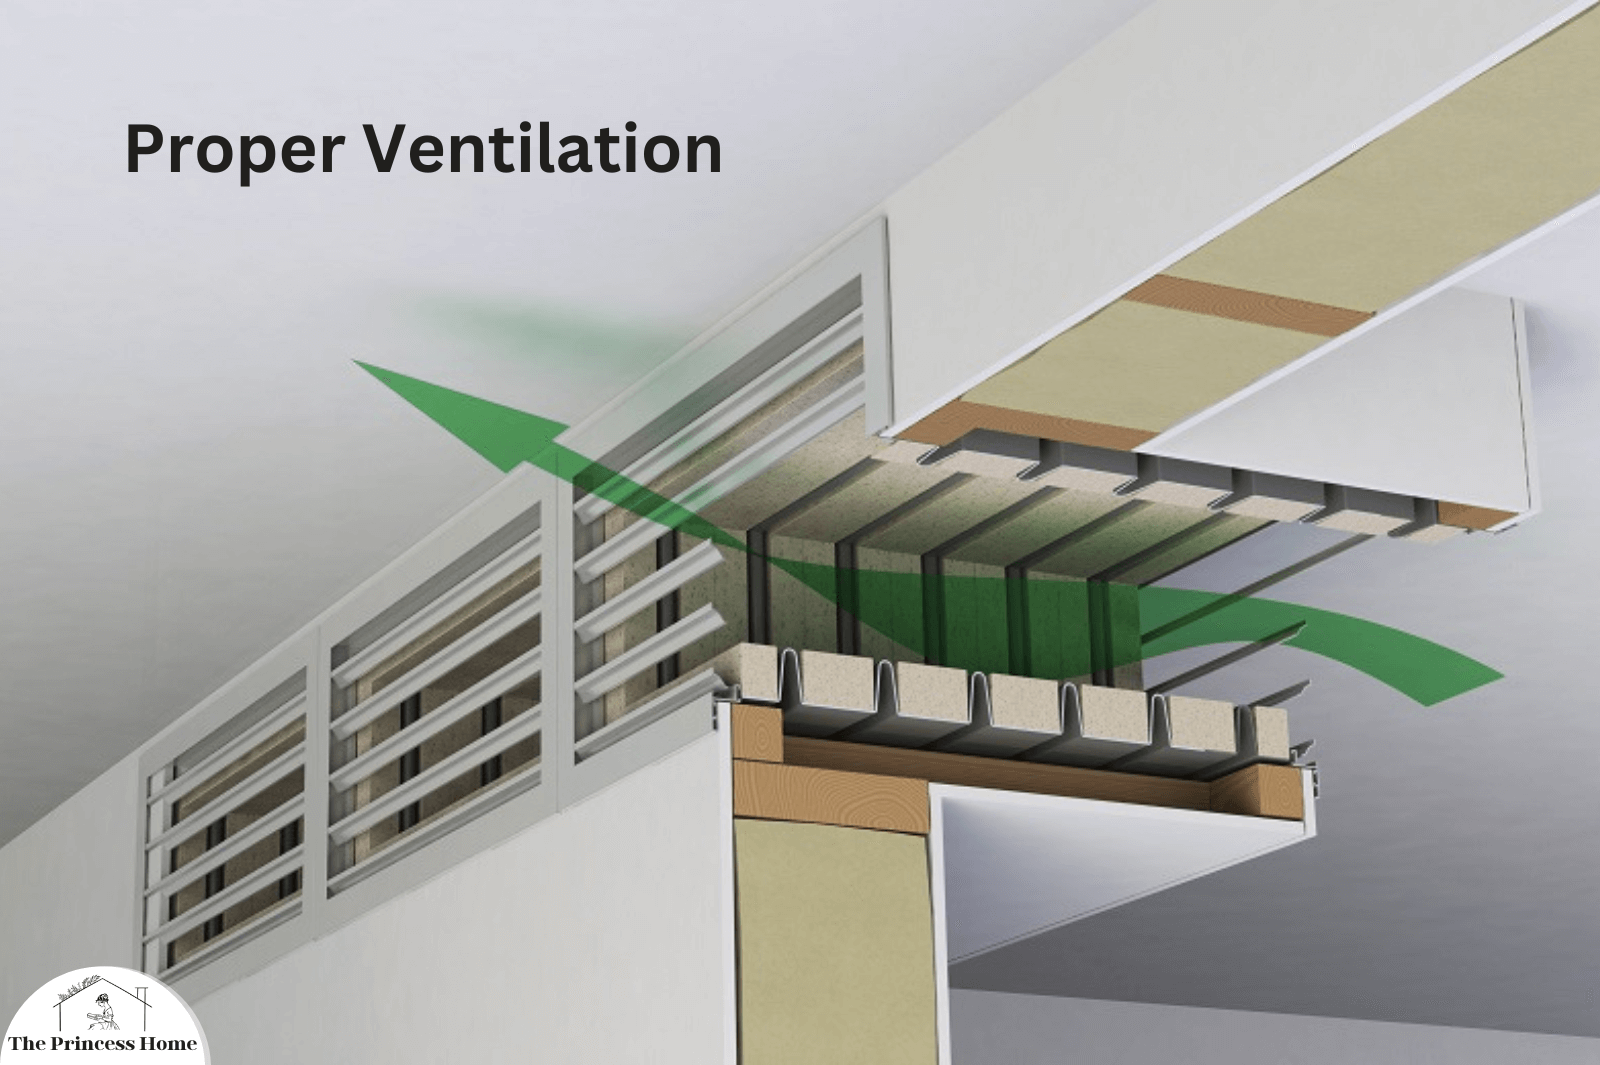 8. Proper Ventilation: